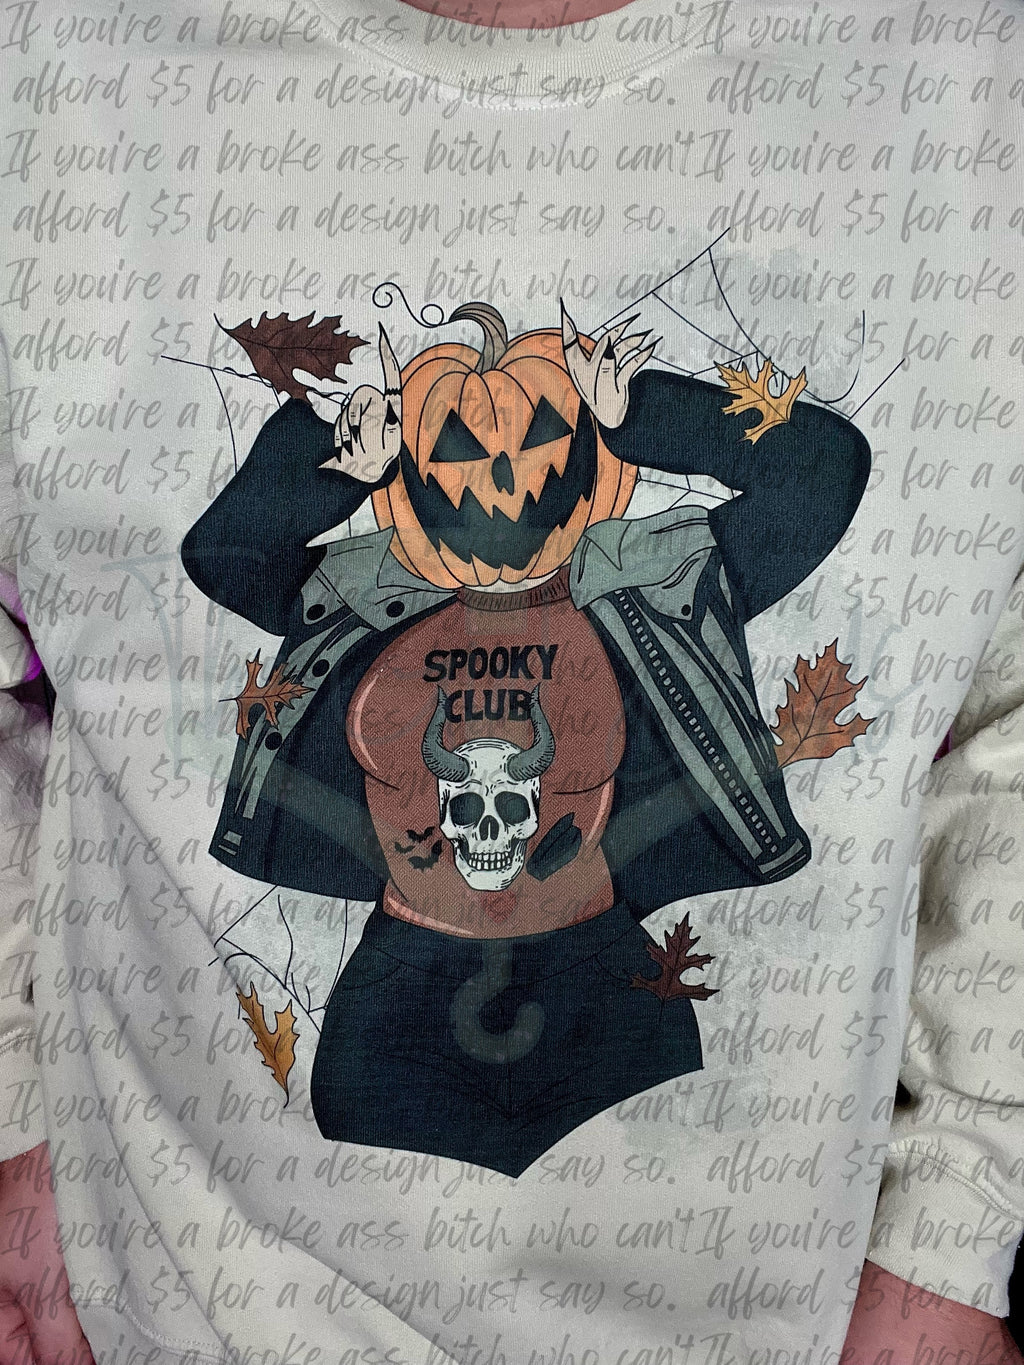 Spooky Club Top Design